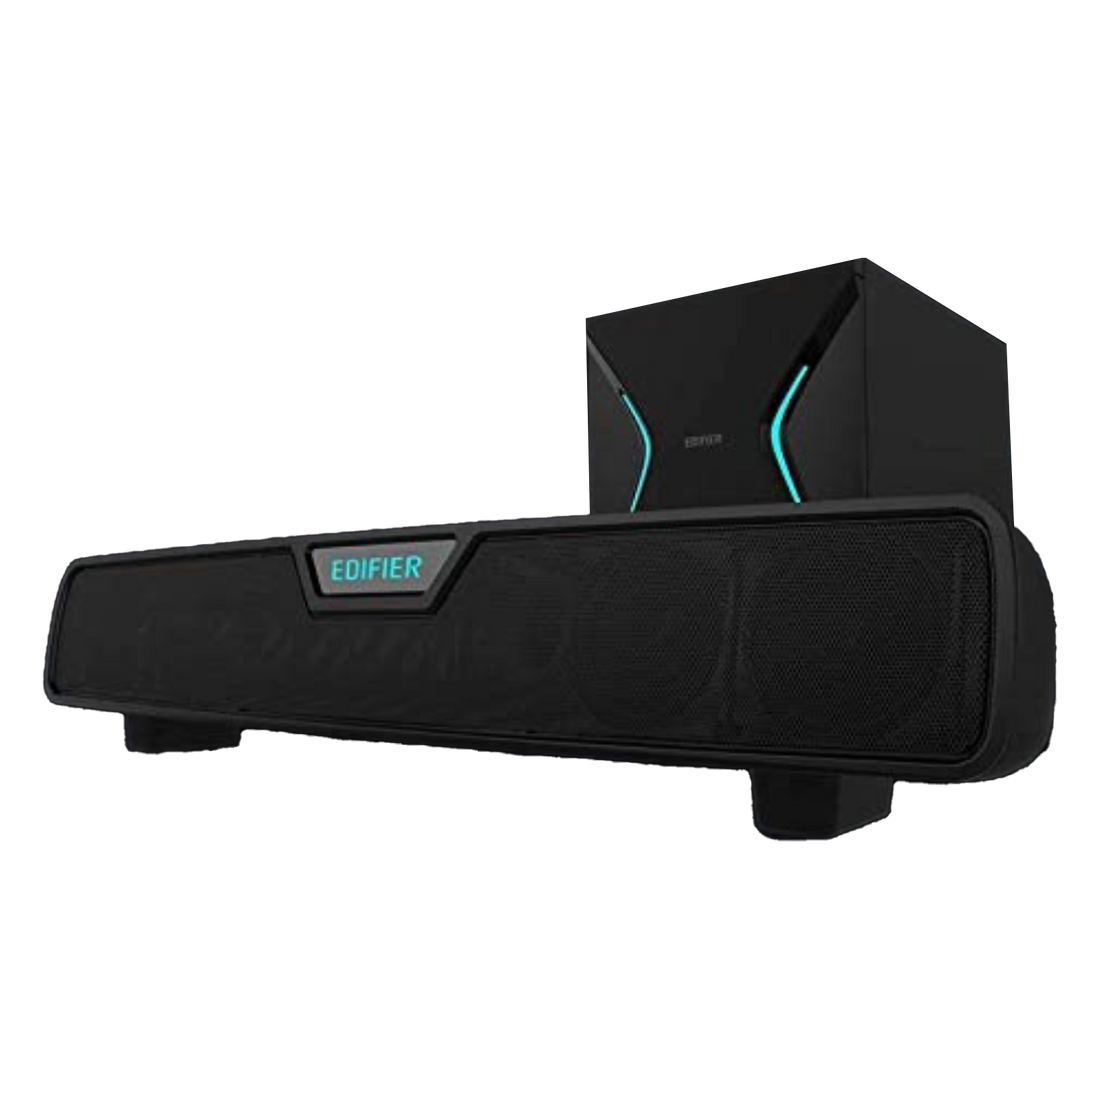 G7000 Wireless Subwoofer Gaming Speaker